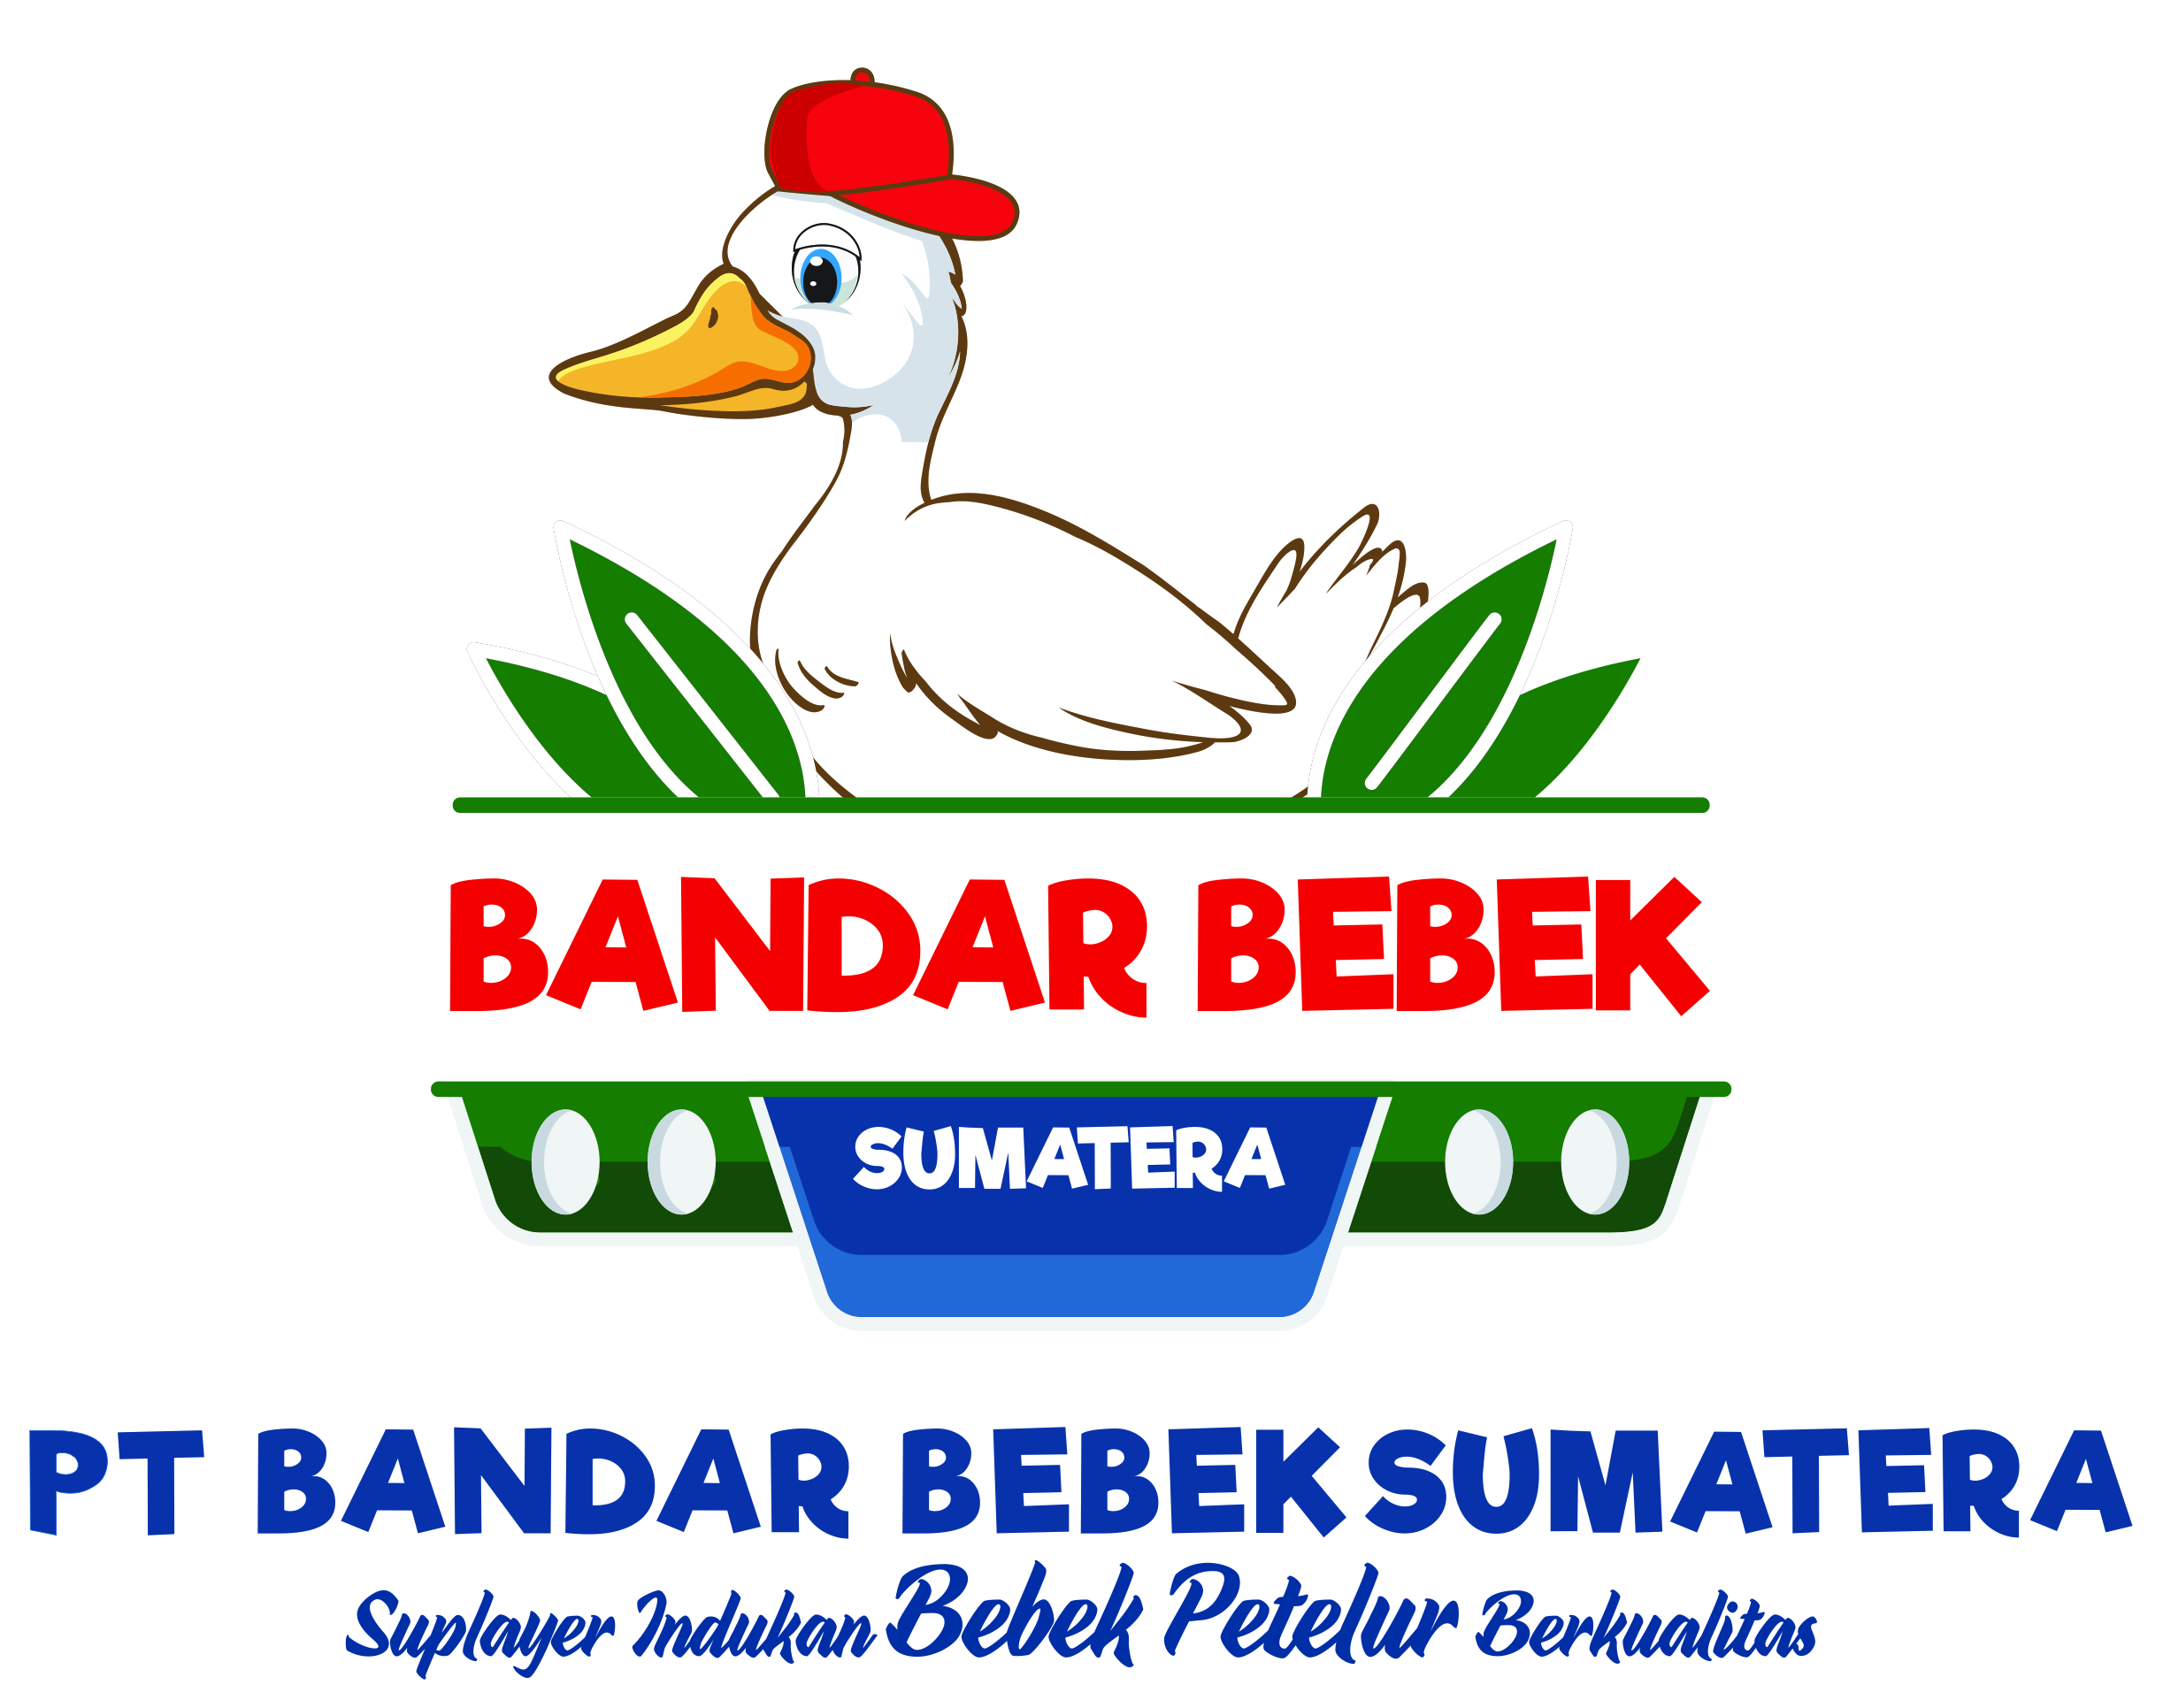 Image Logo Bandar Bebek